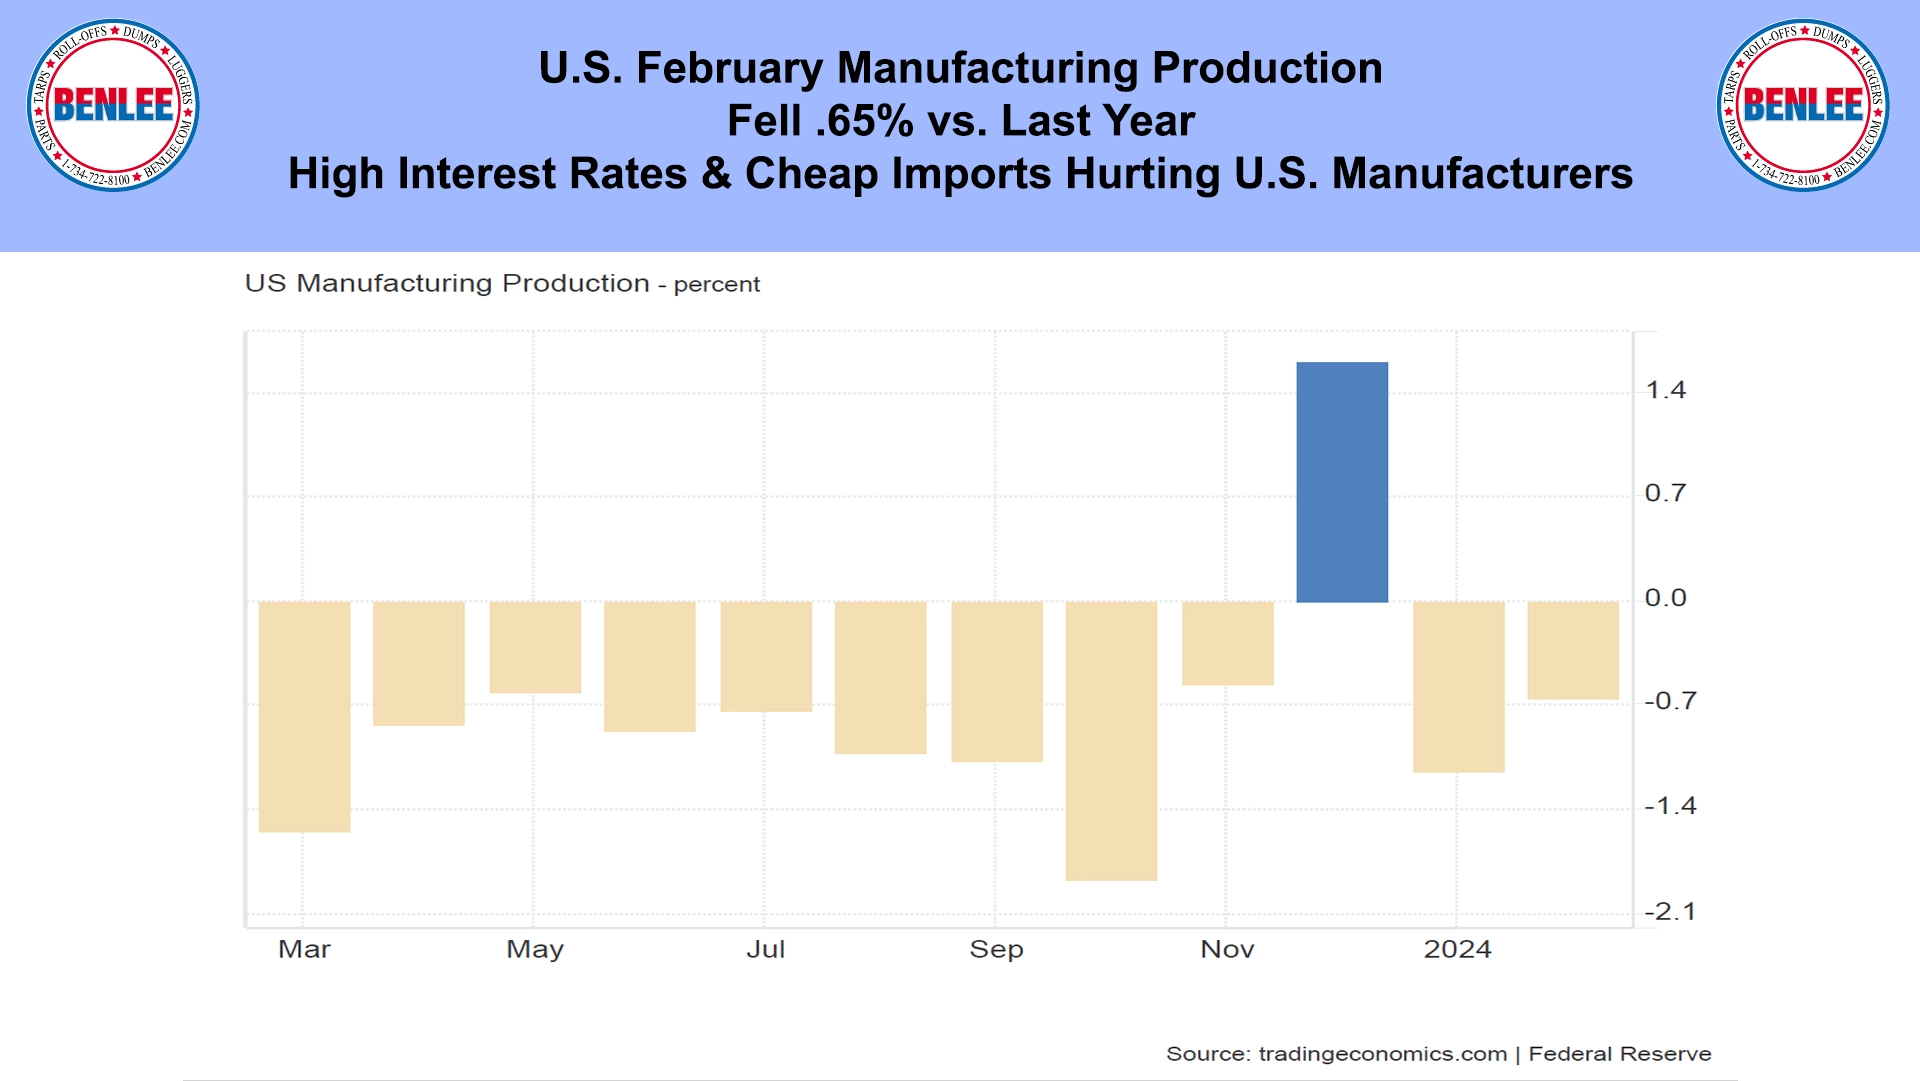 U.S. February Manufacturing Production